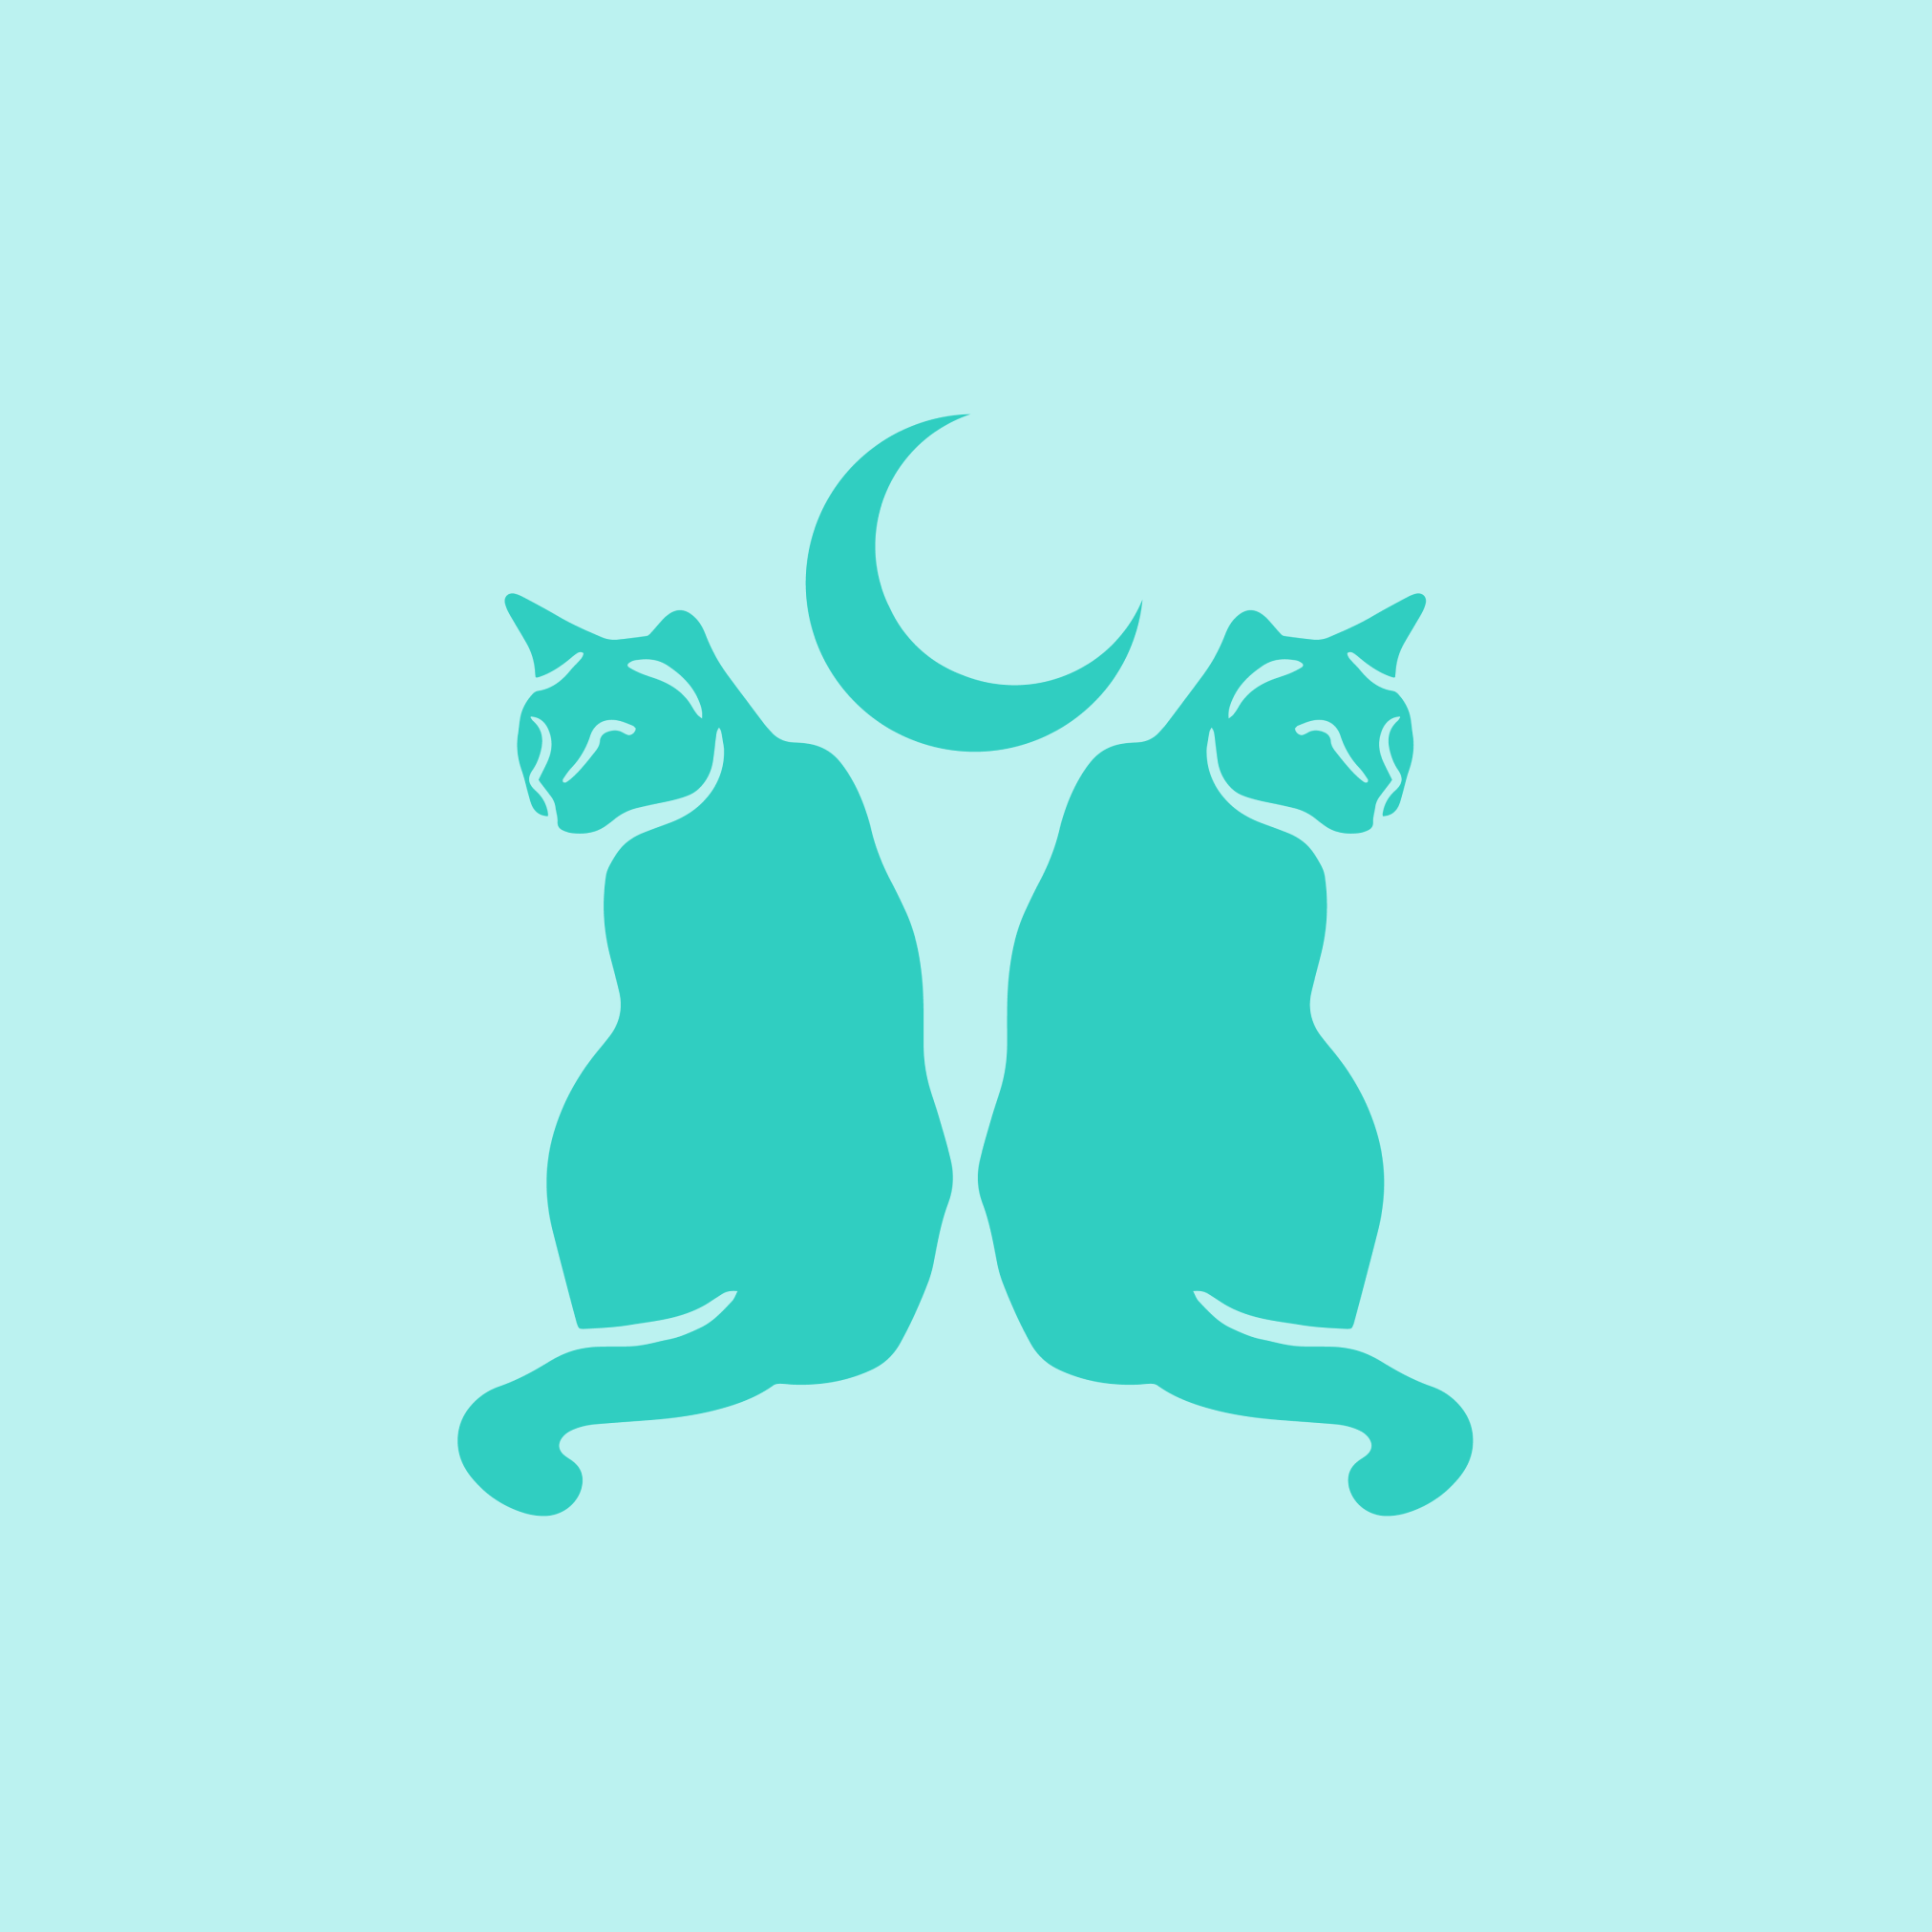 Illustration cats design